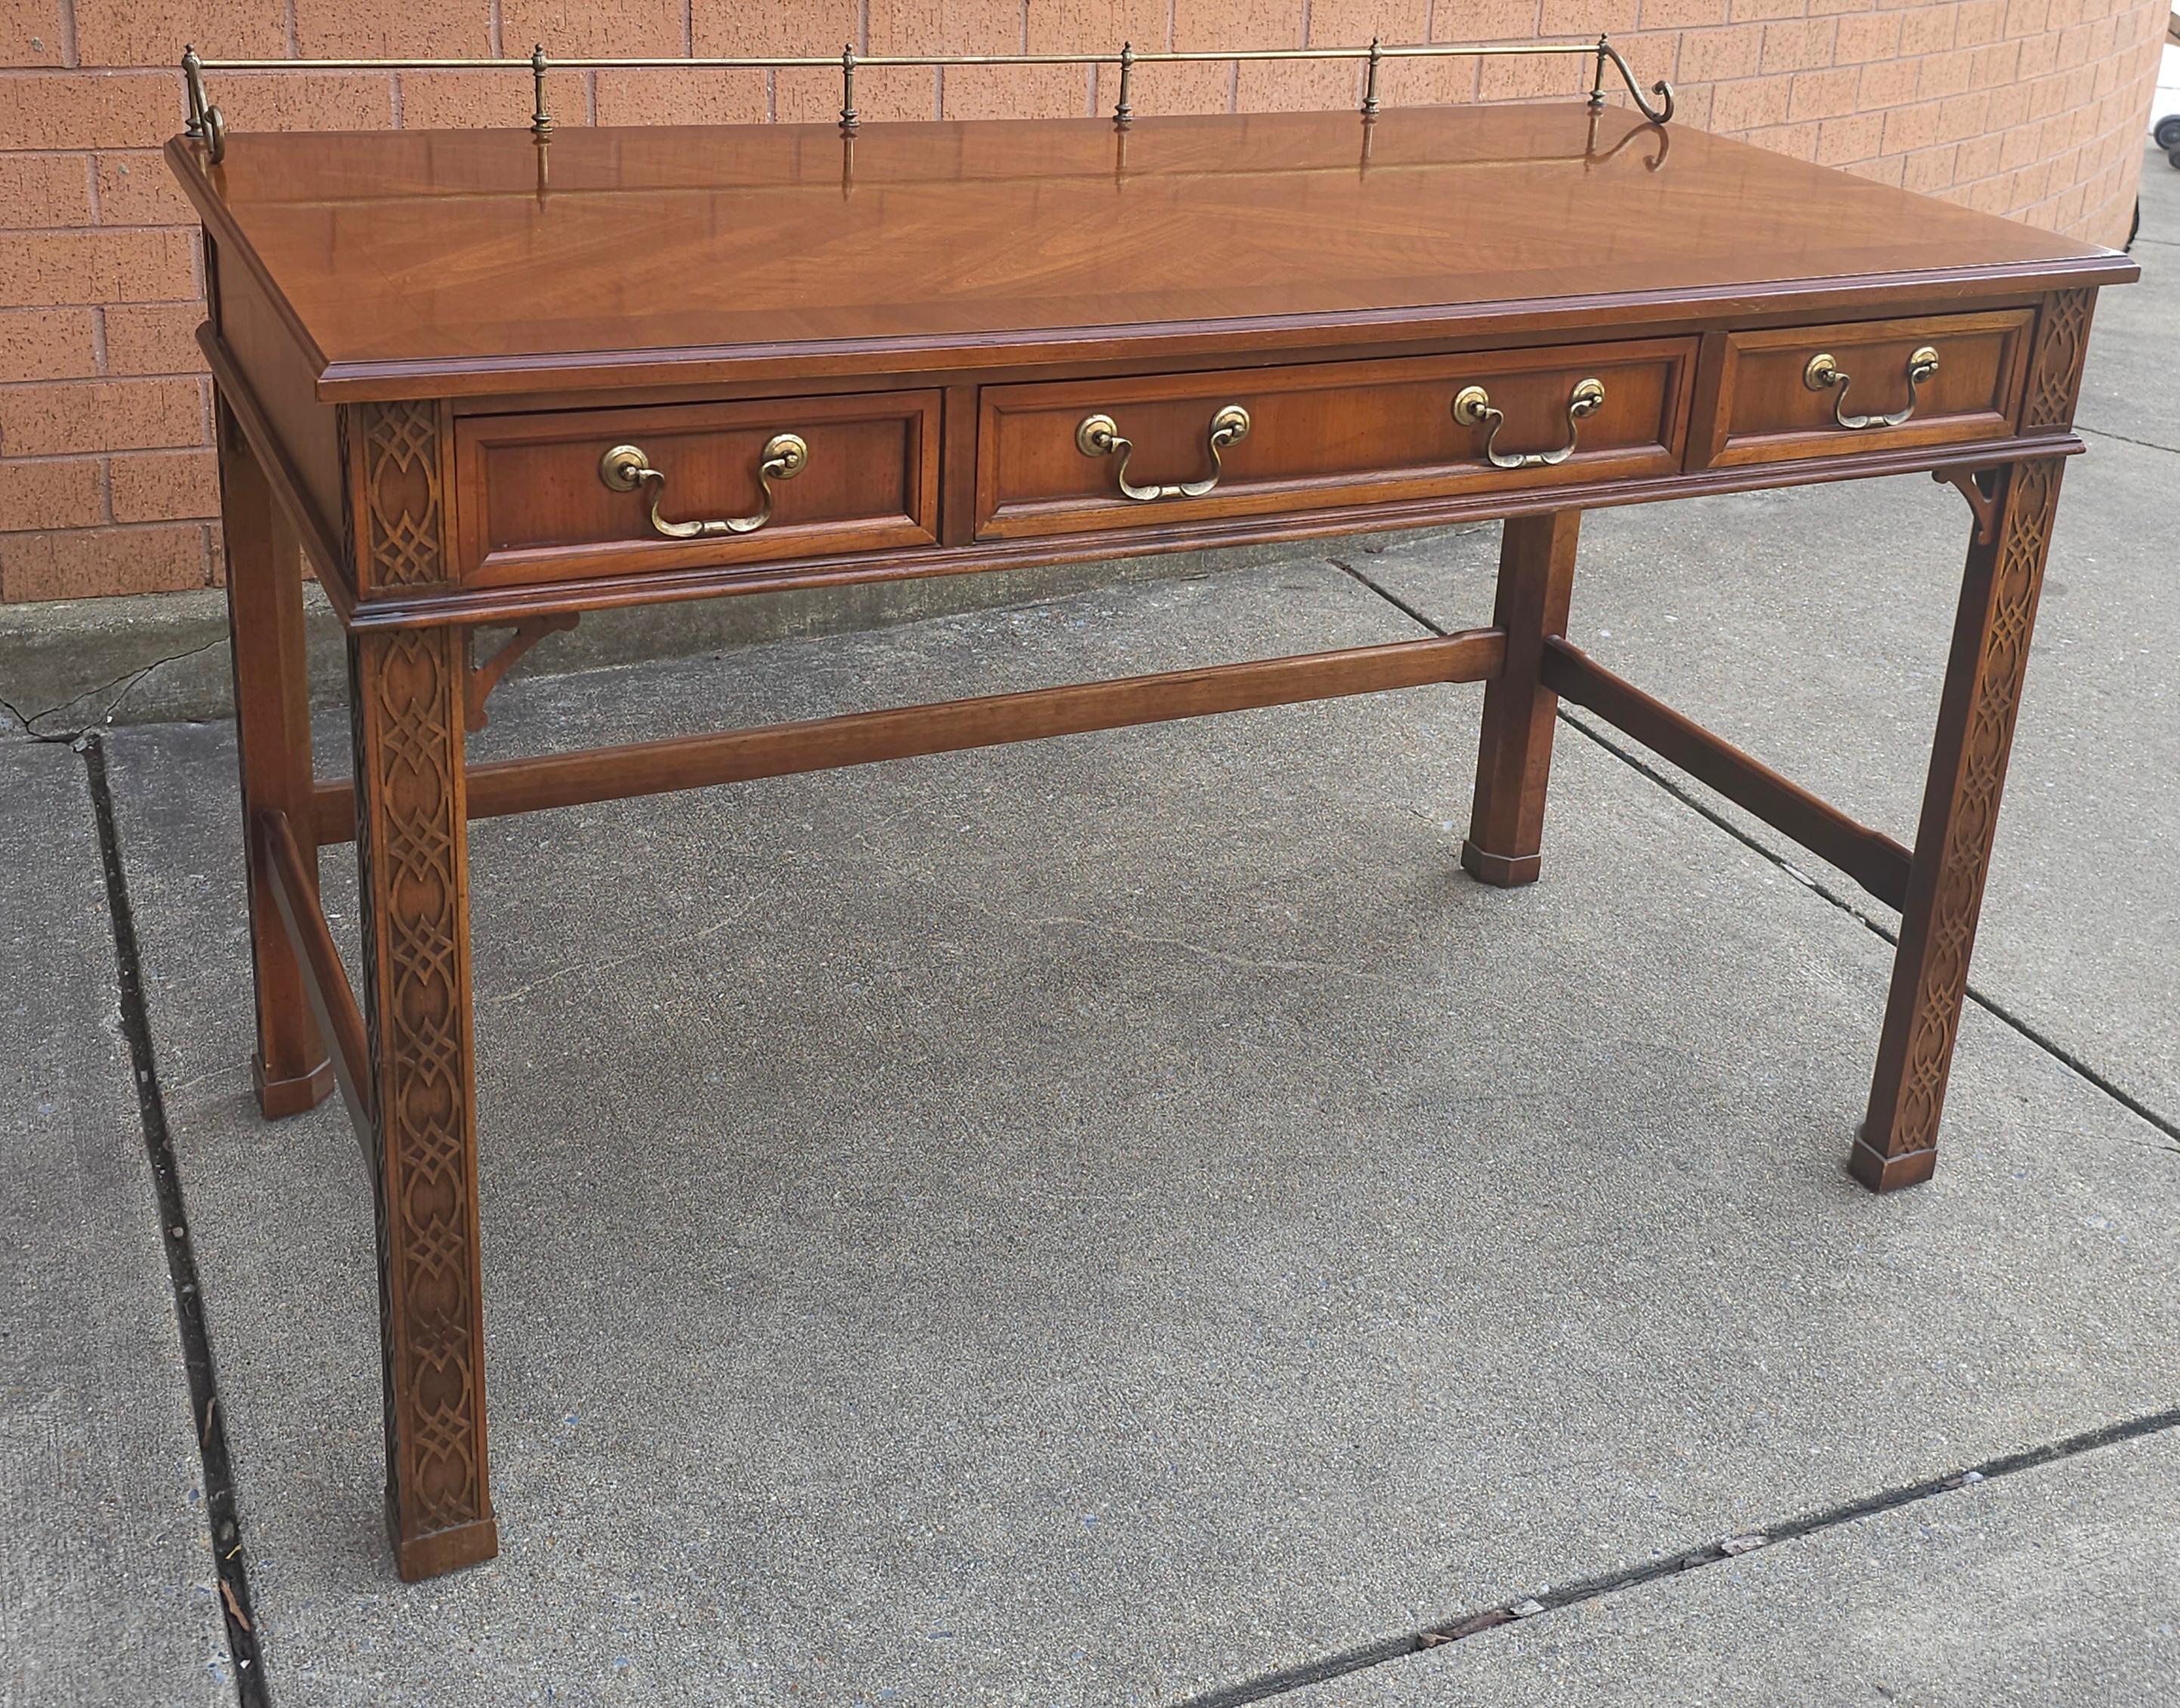 A George III Style Blind Fretwork Mahogany Table wrting Desk. Measures 48